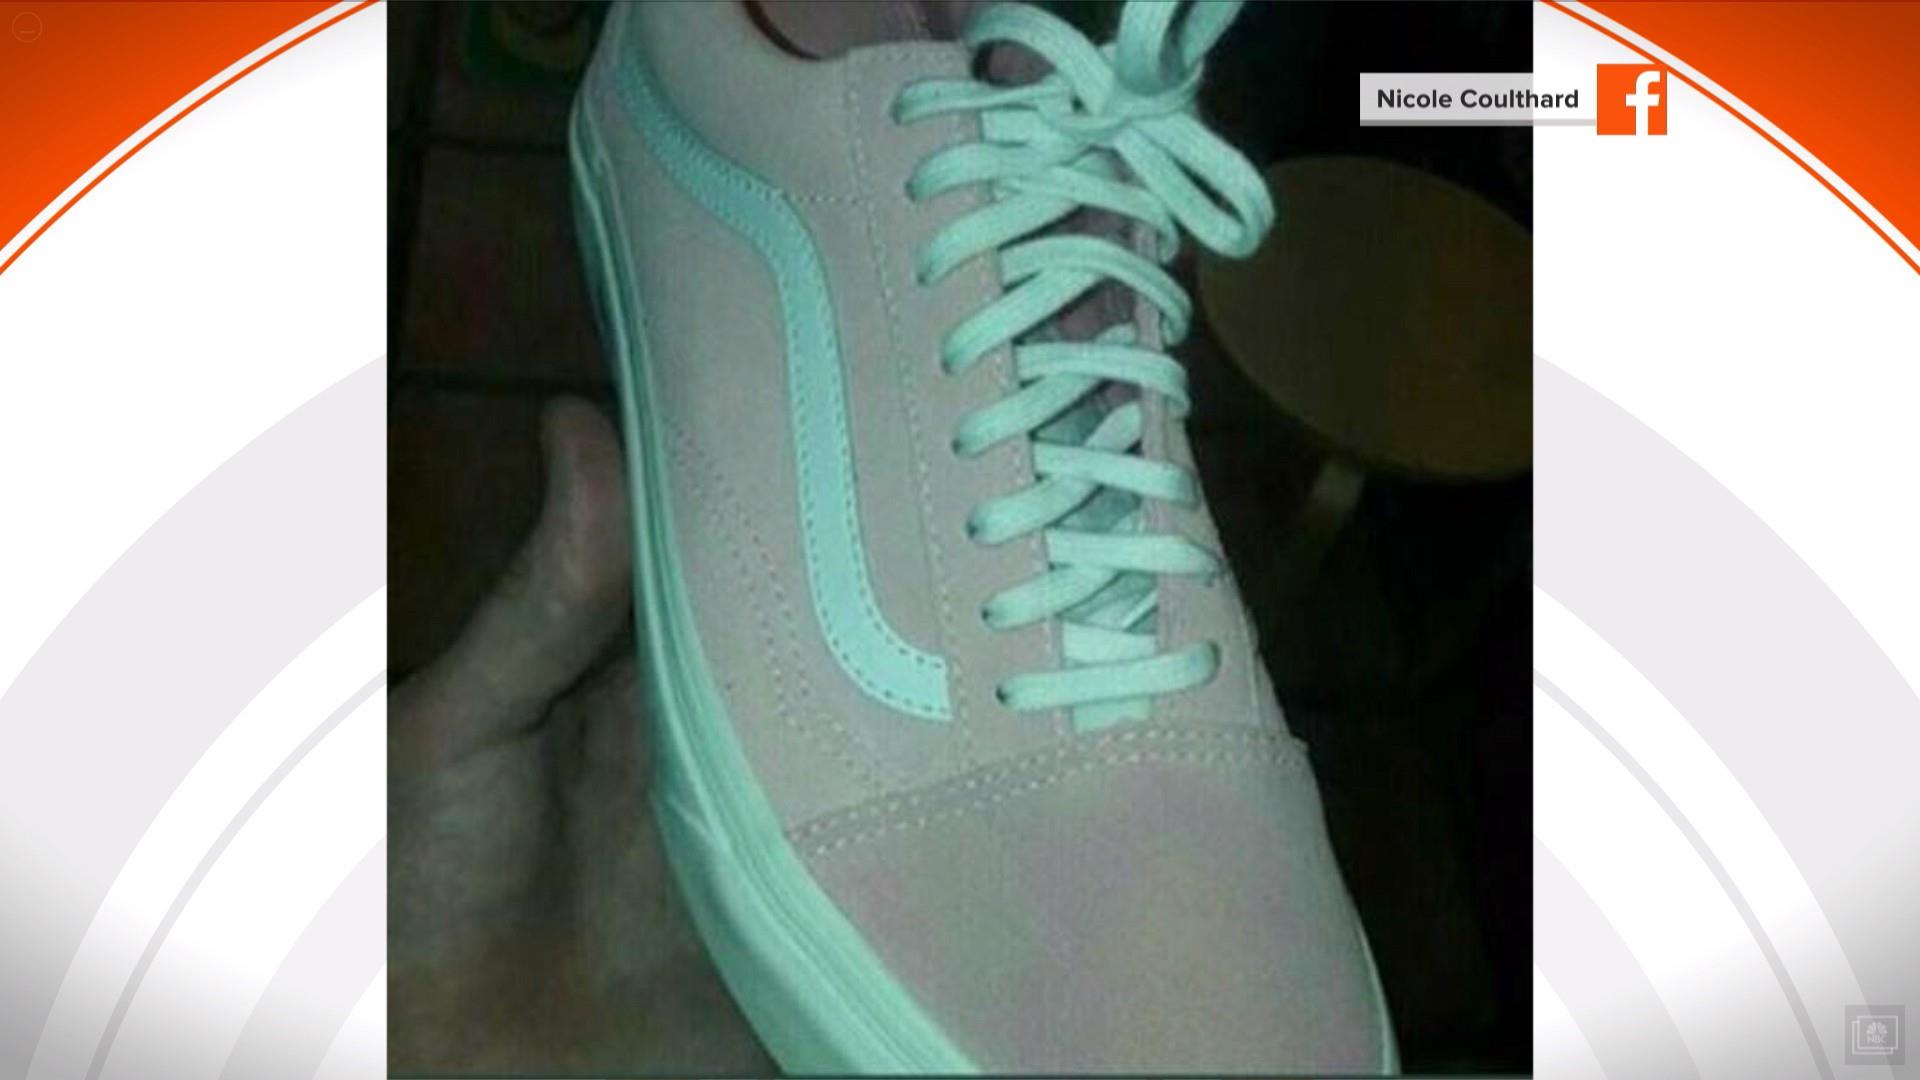 the van shoe color